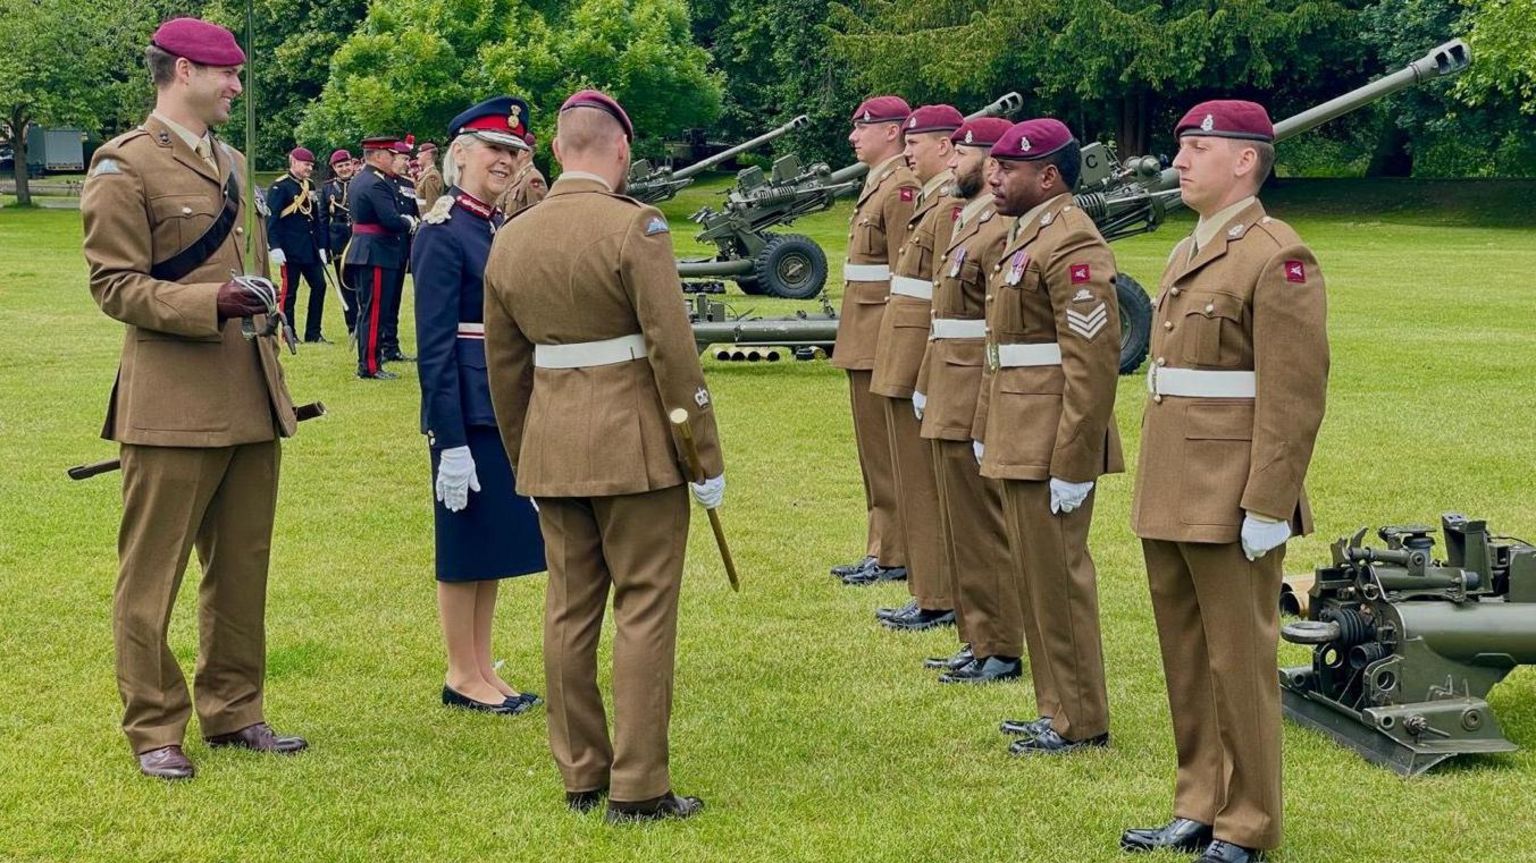 Jennifer Tolhurst in Lord Lieutenant's uniform inspecting troops in ceremonial uniform 